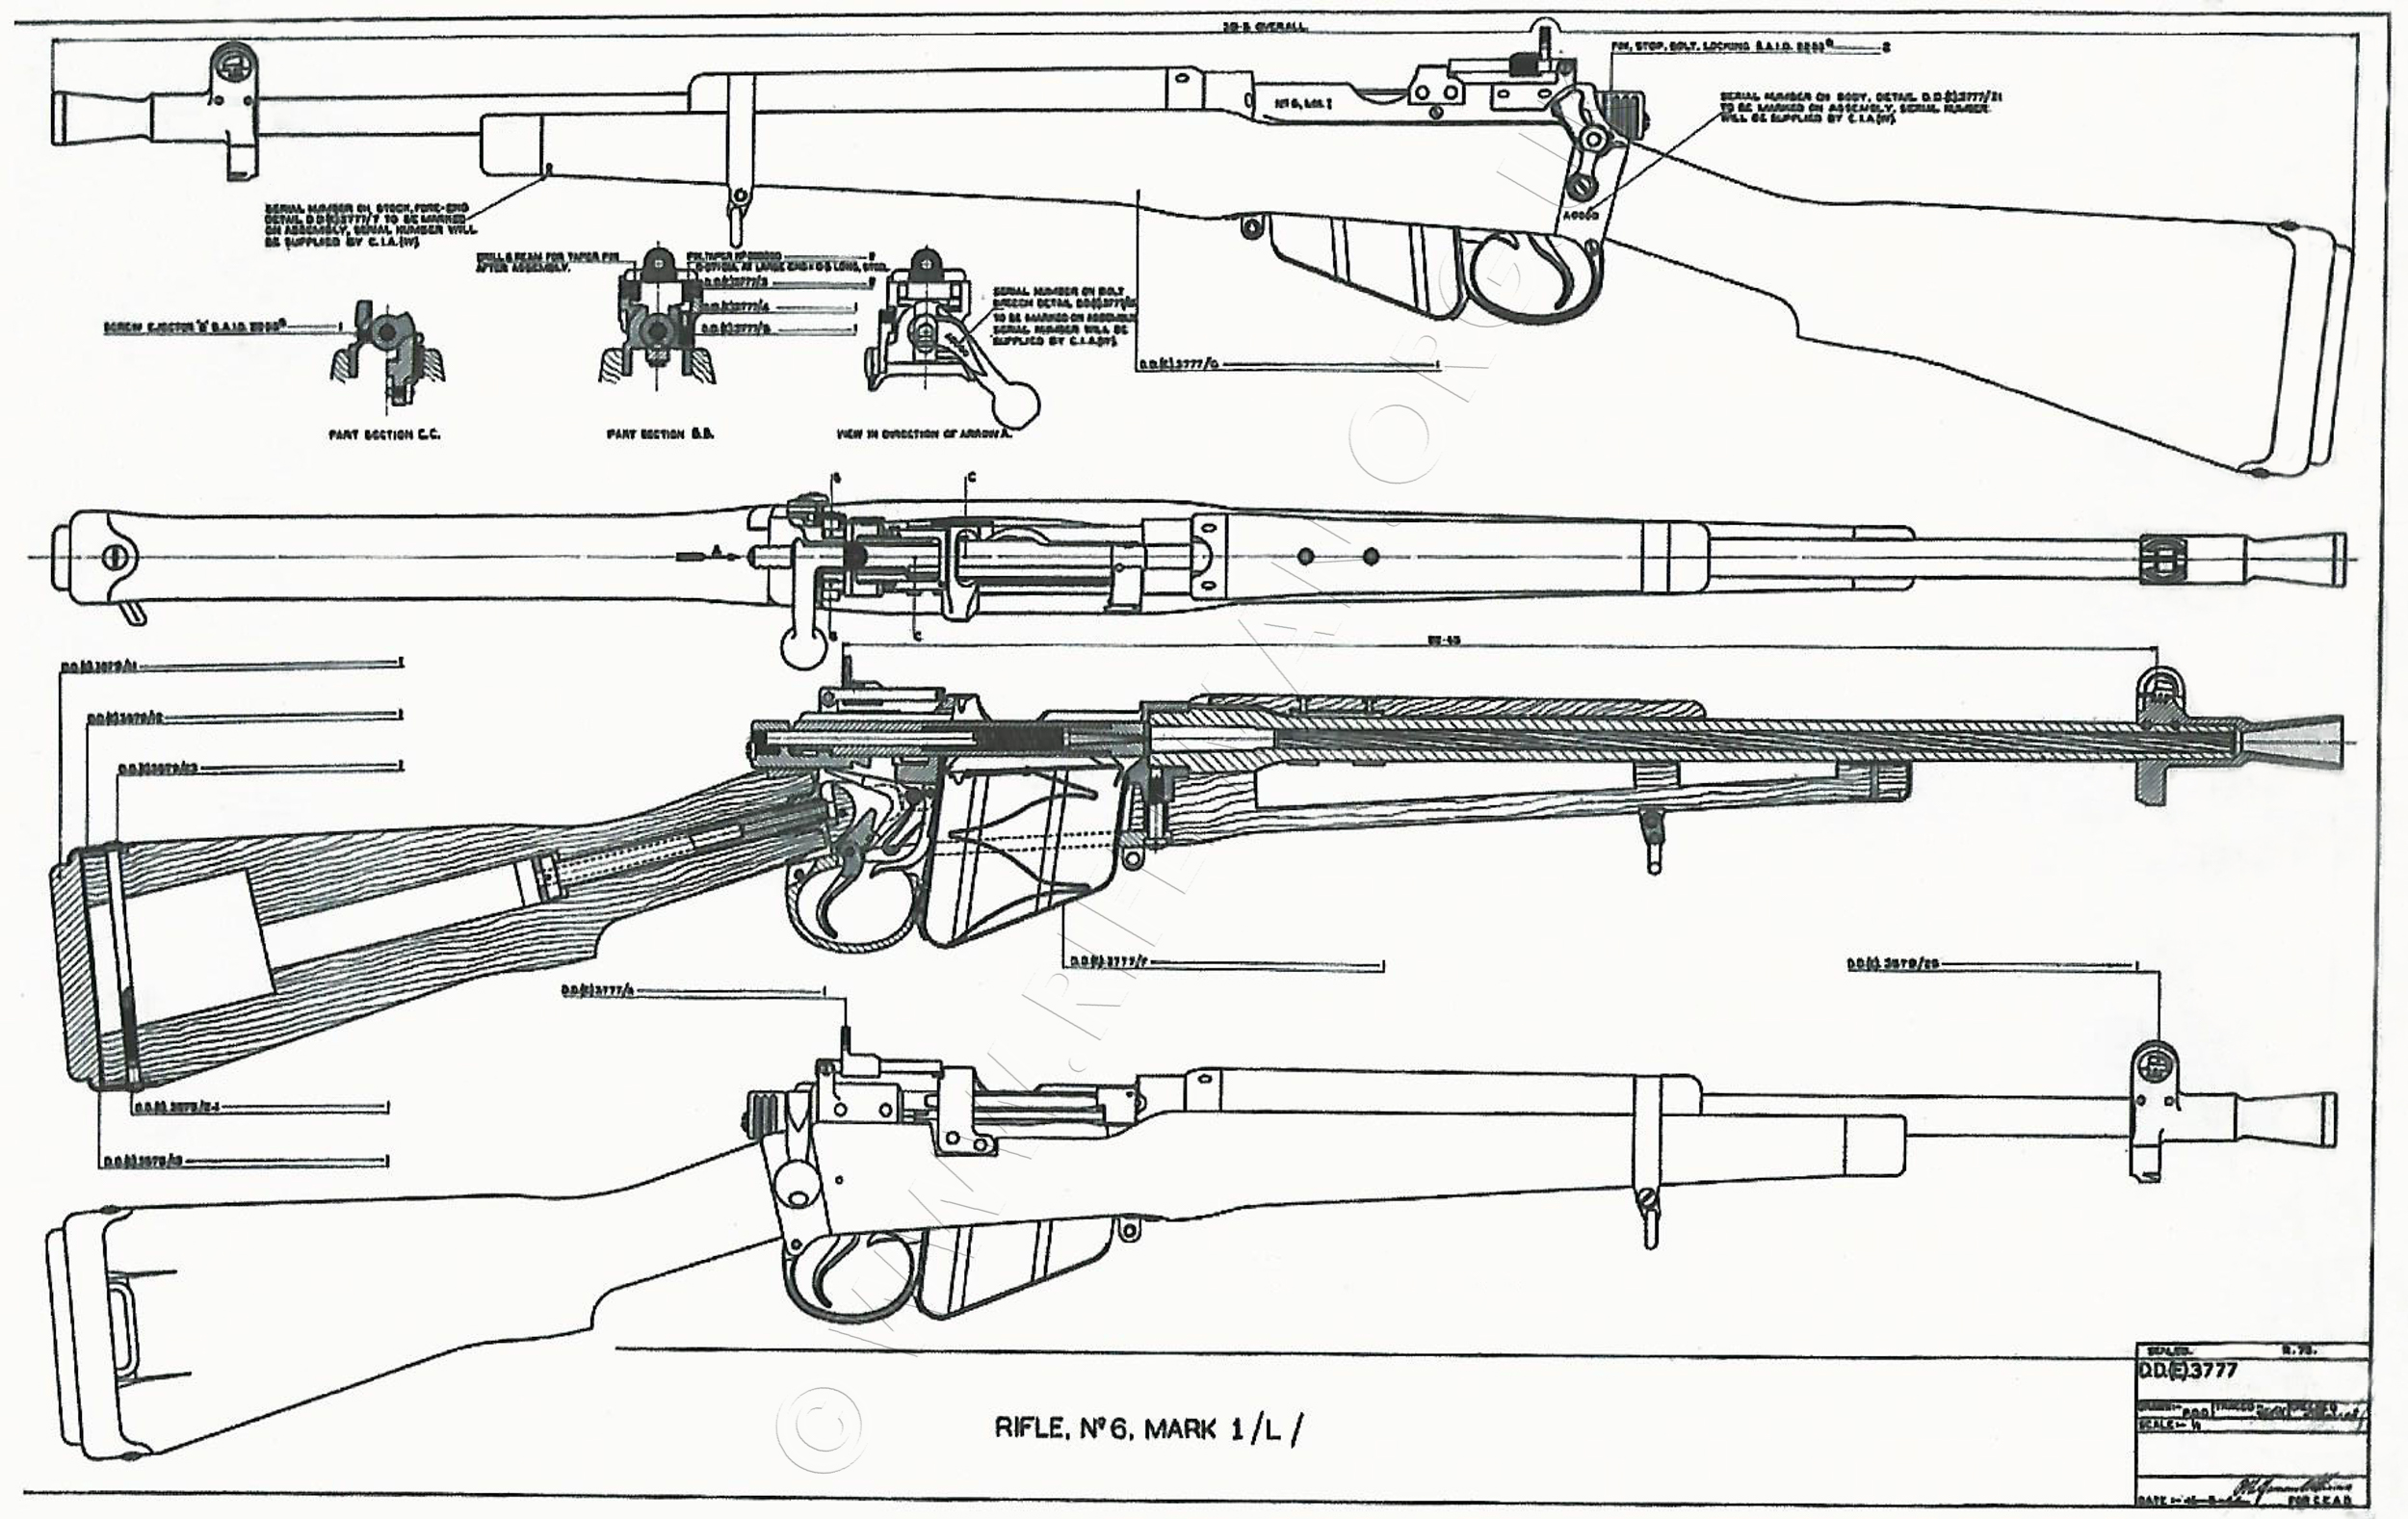 Lot - Lee-Enfield, No.4 Mk I* (Longbranch) bolt action rifle